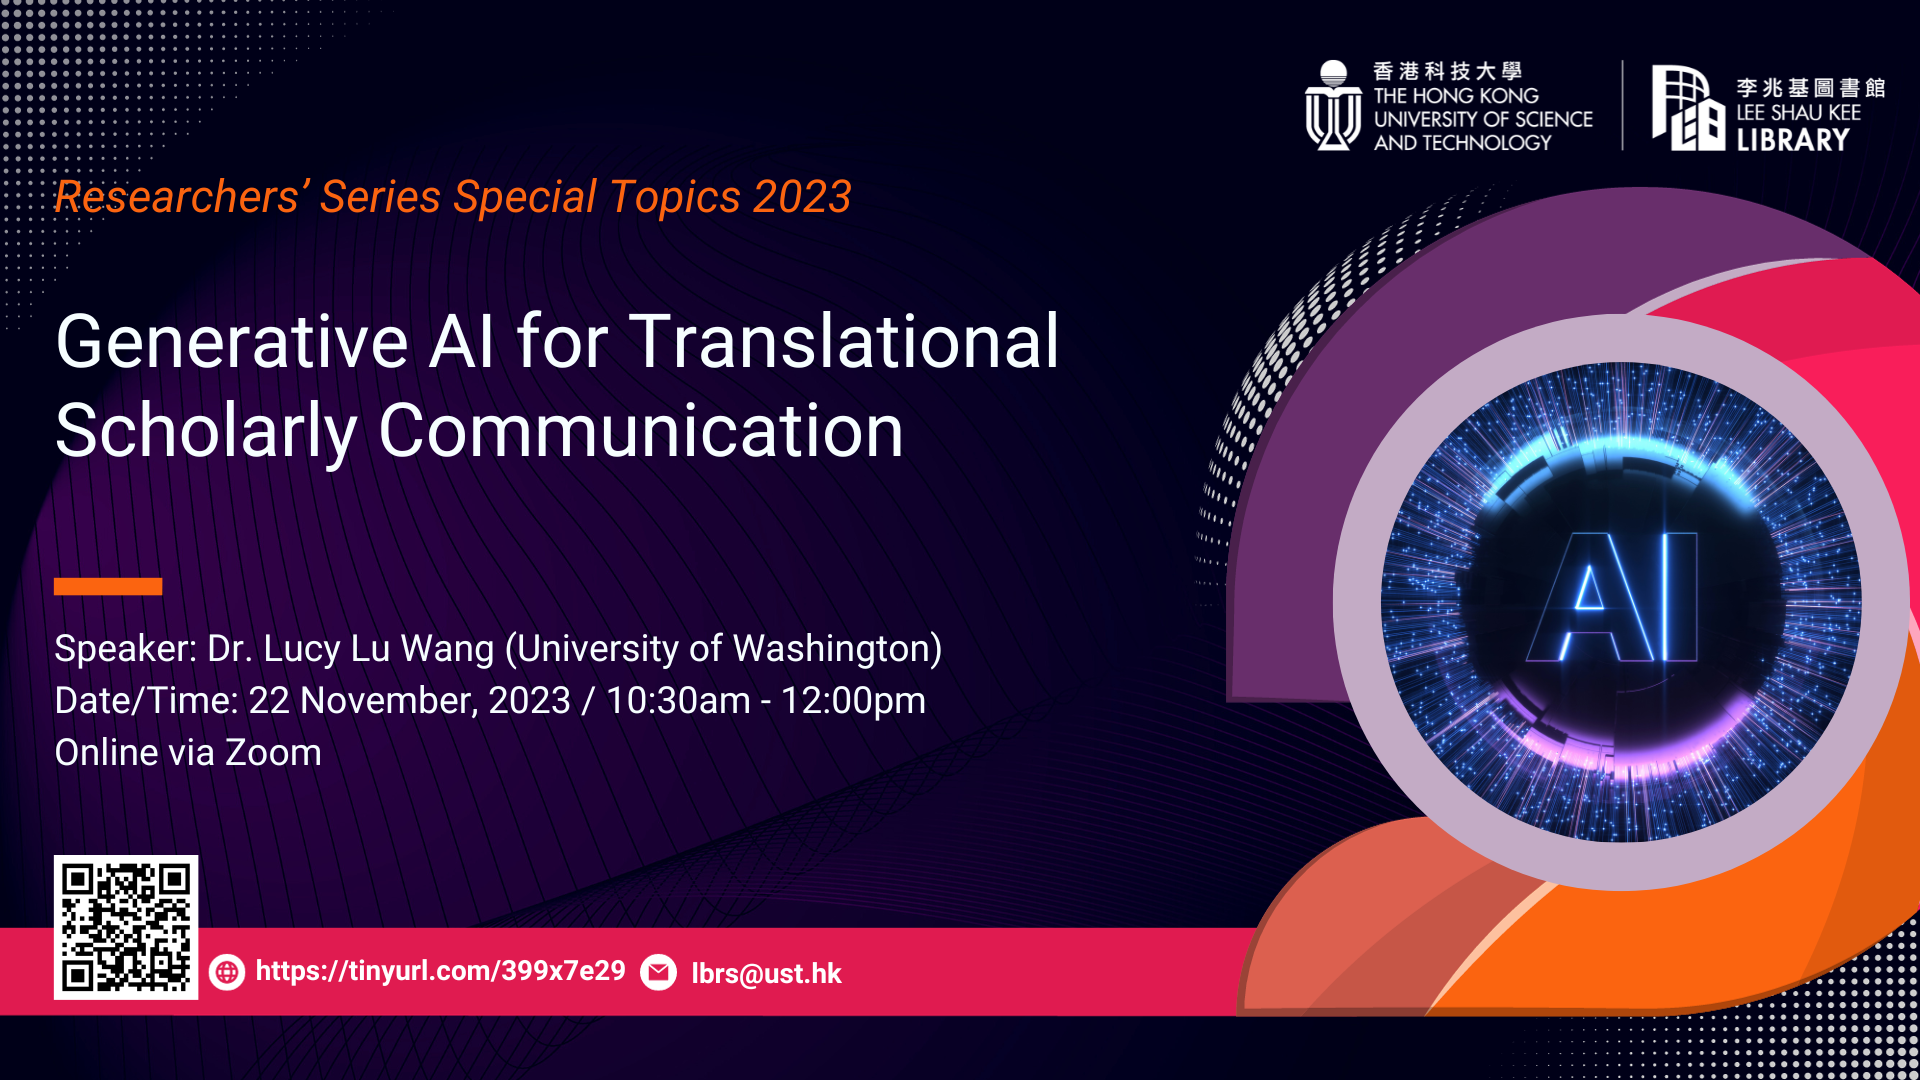 Generative AI for Translational Scholarly Communication